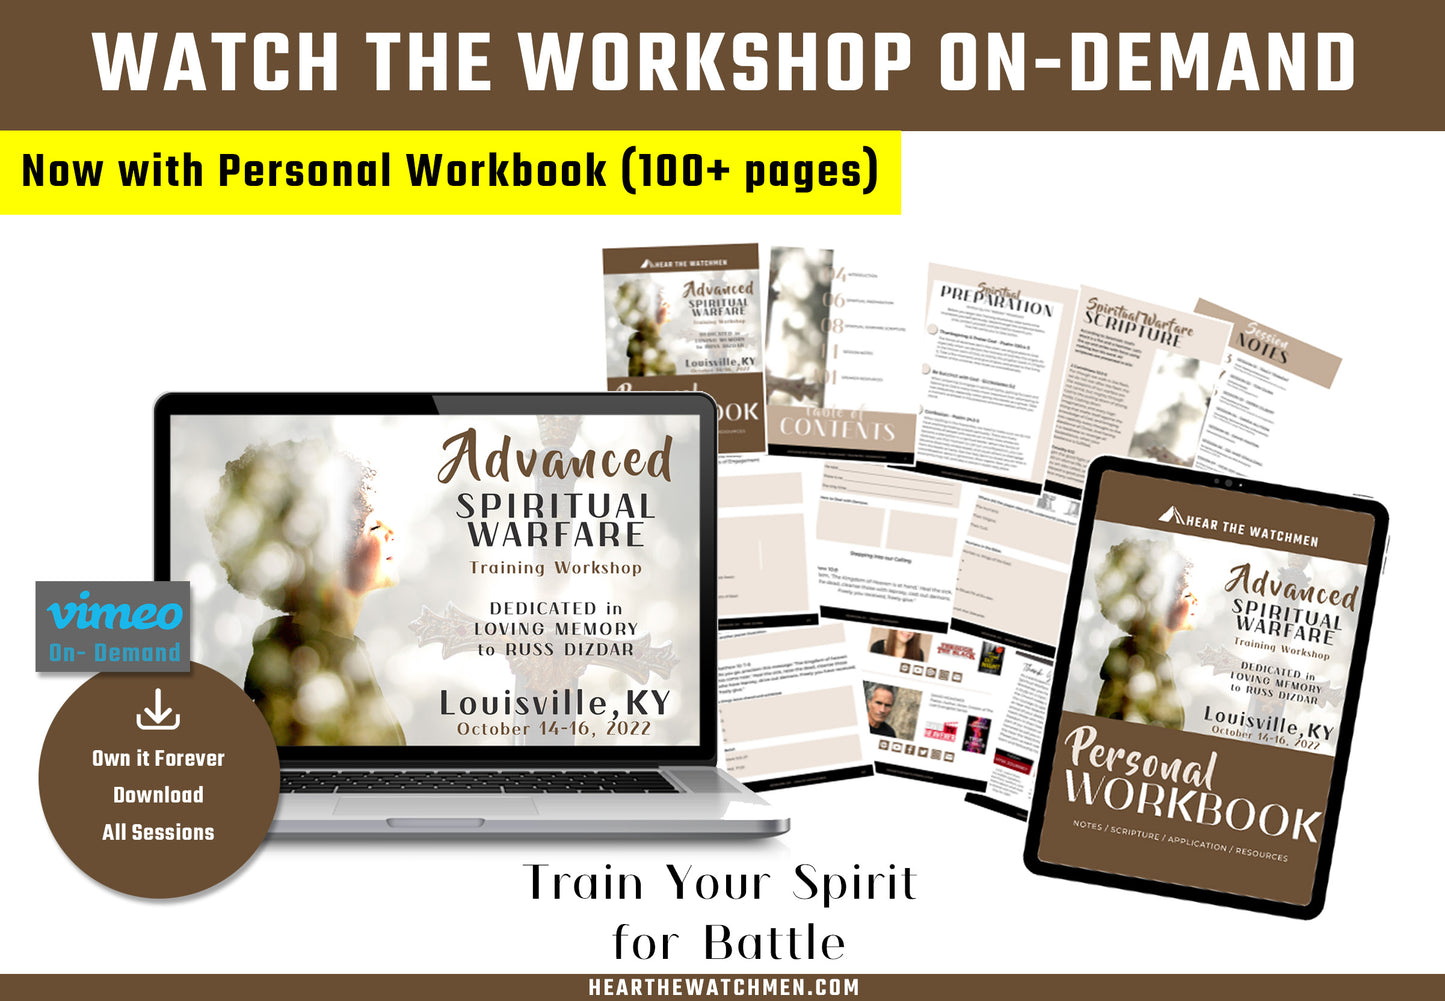 Advanced Spiritual Warfare Workshop Louisville KY On-Demand